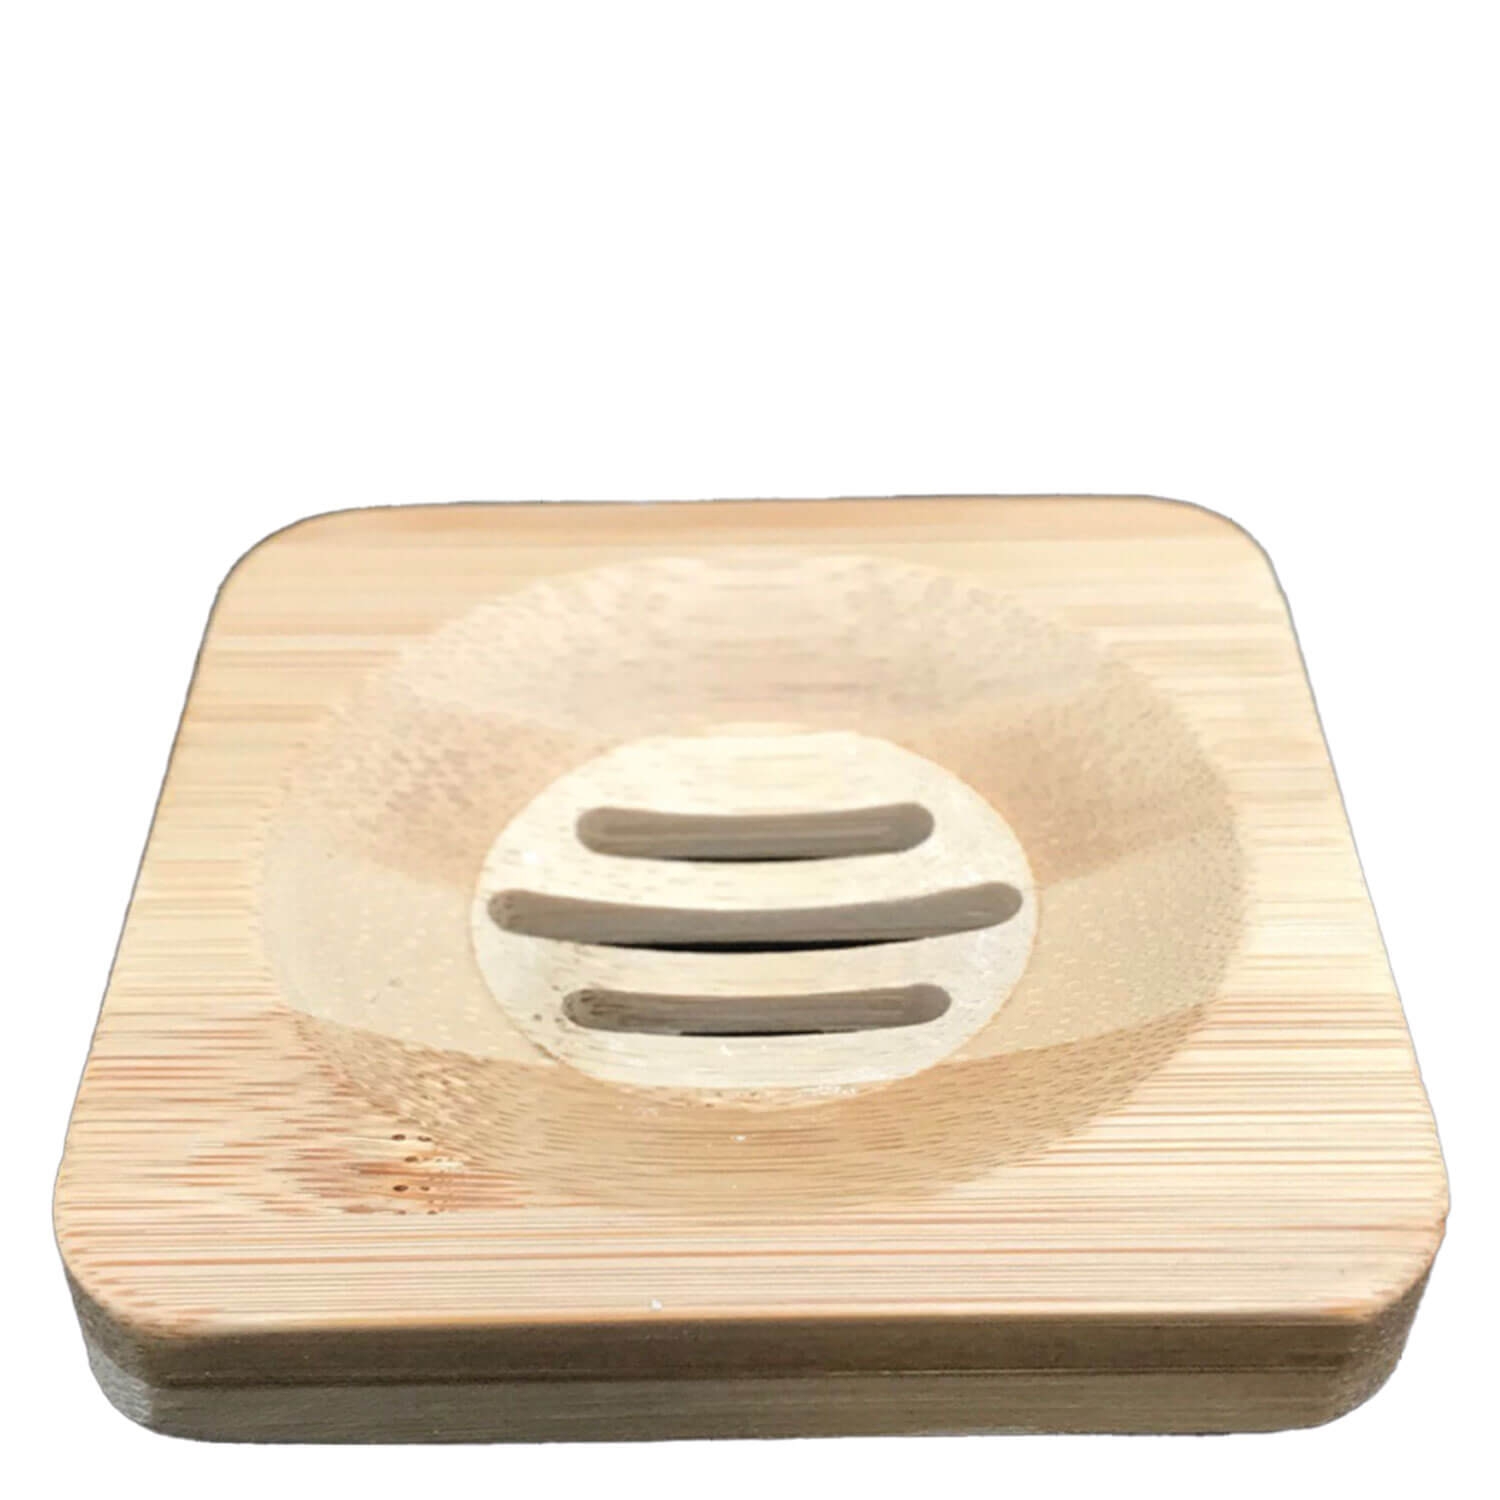 Product image from HiBAR - Seifenschale aus Bambus